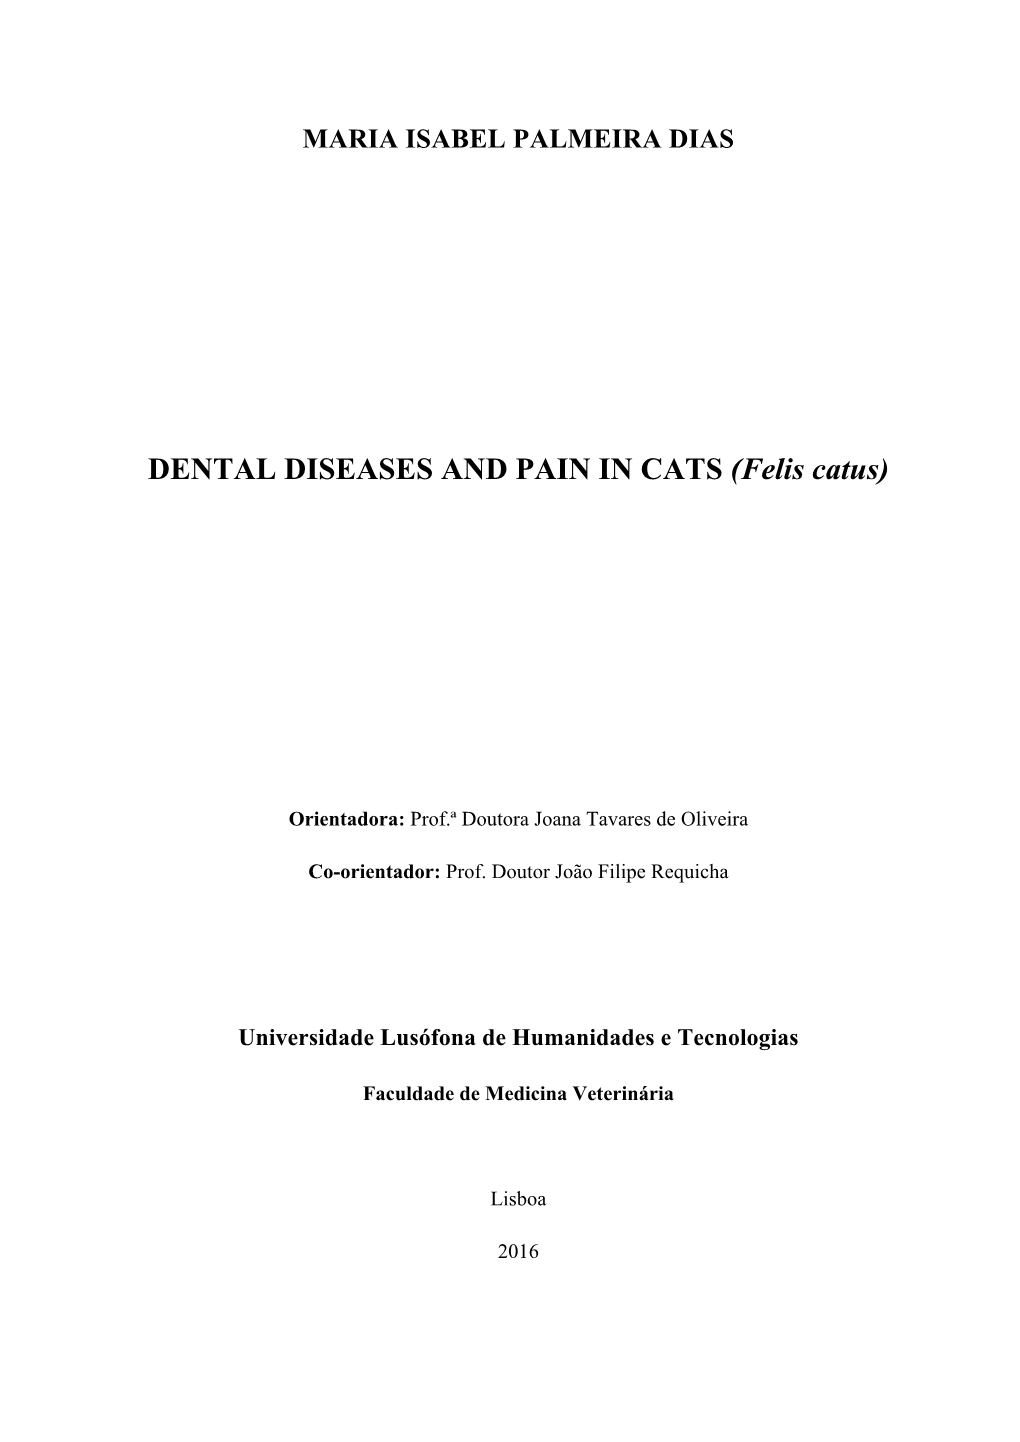 DENTAL DISEASES and PAIN in CATS (Felis Catus)